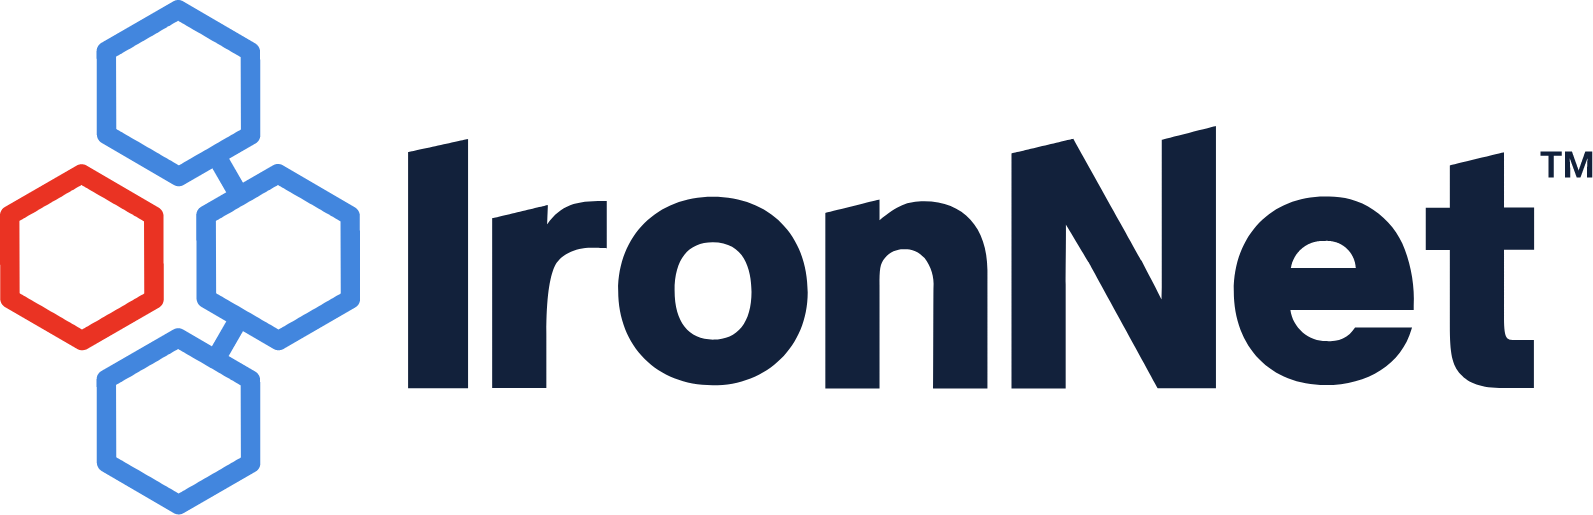 IronNet logo large (transparent PNG)